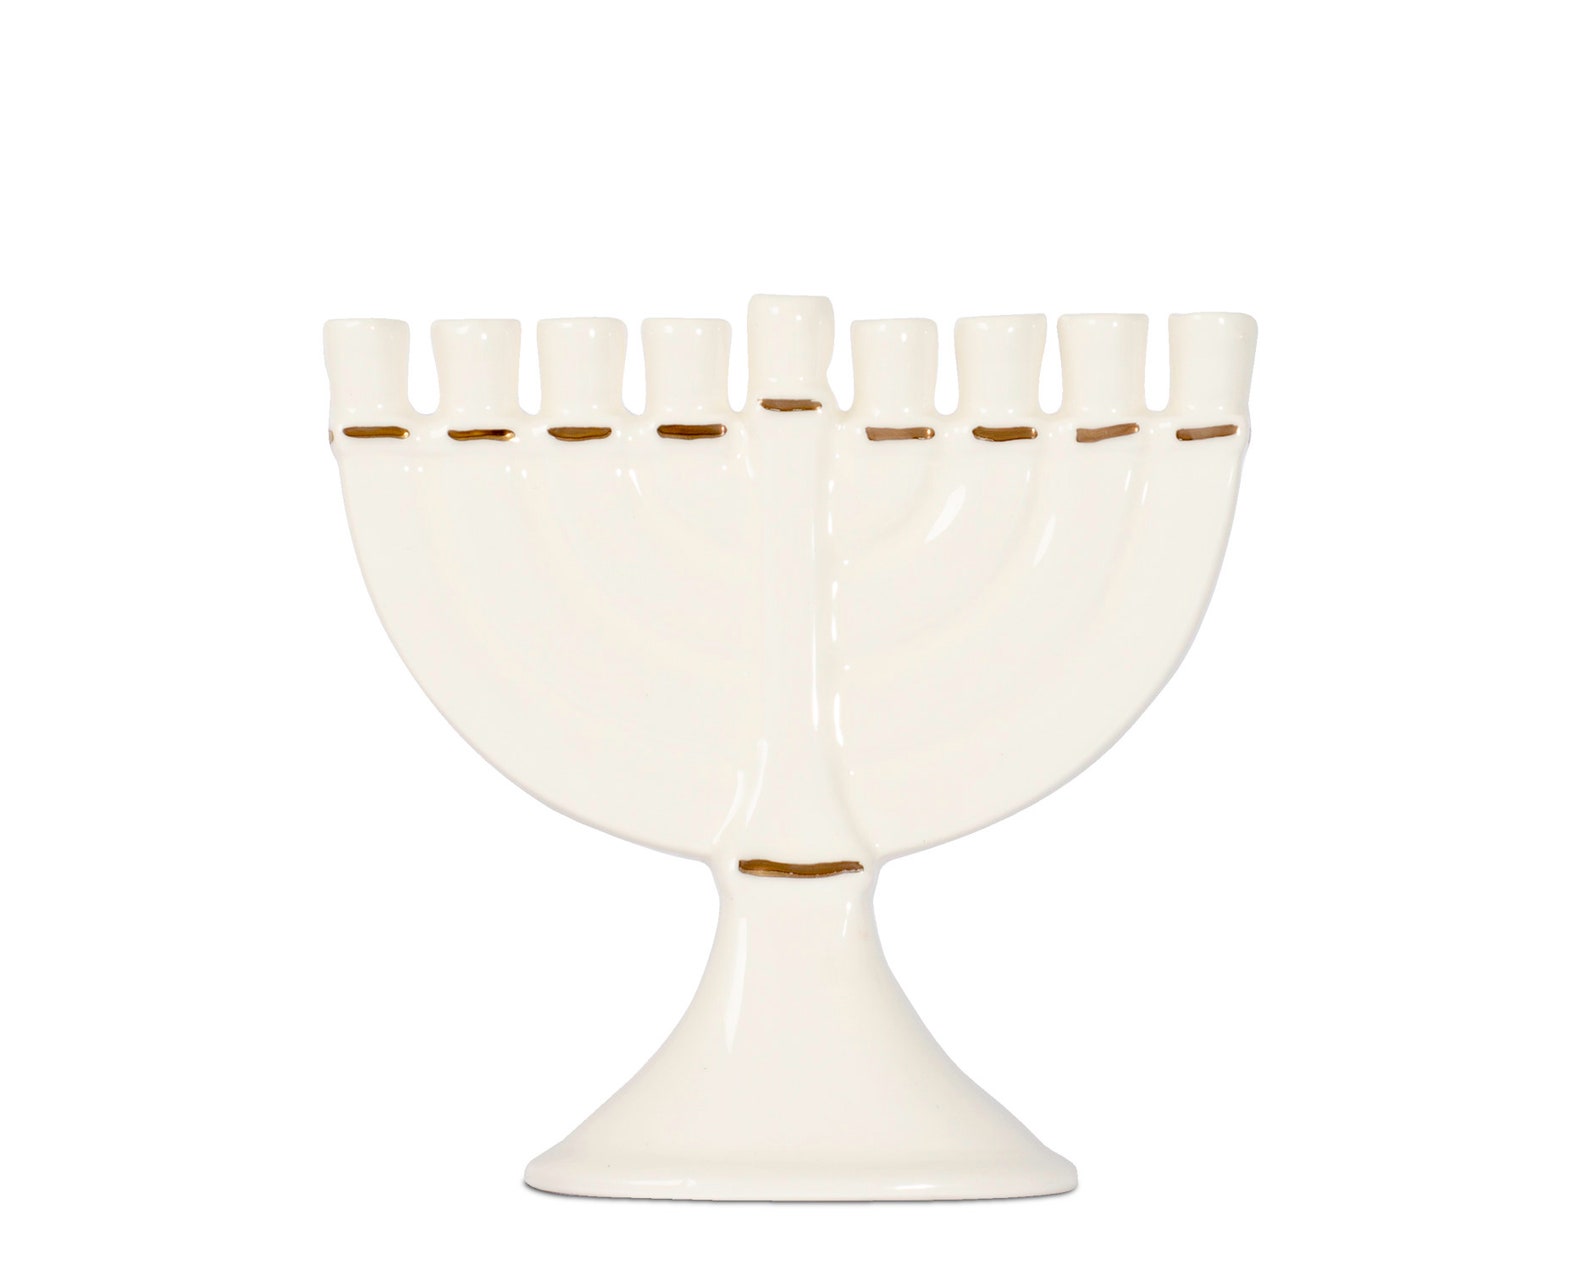 Classic gold Trim Hanukkah Ceramic Menorah